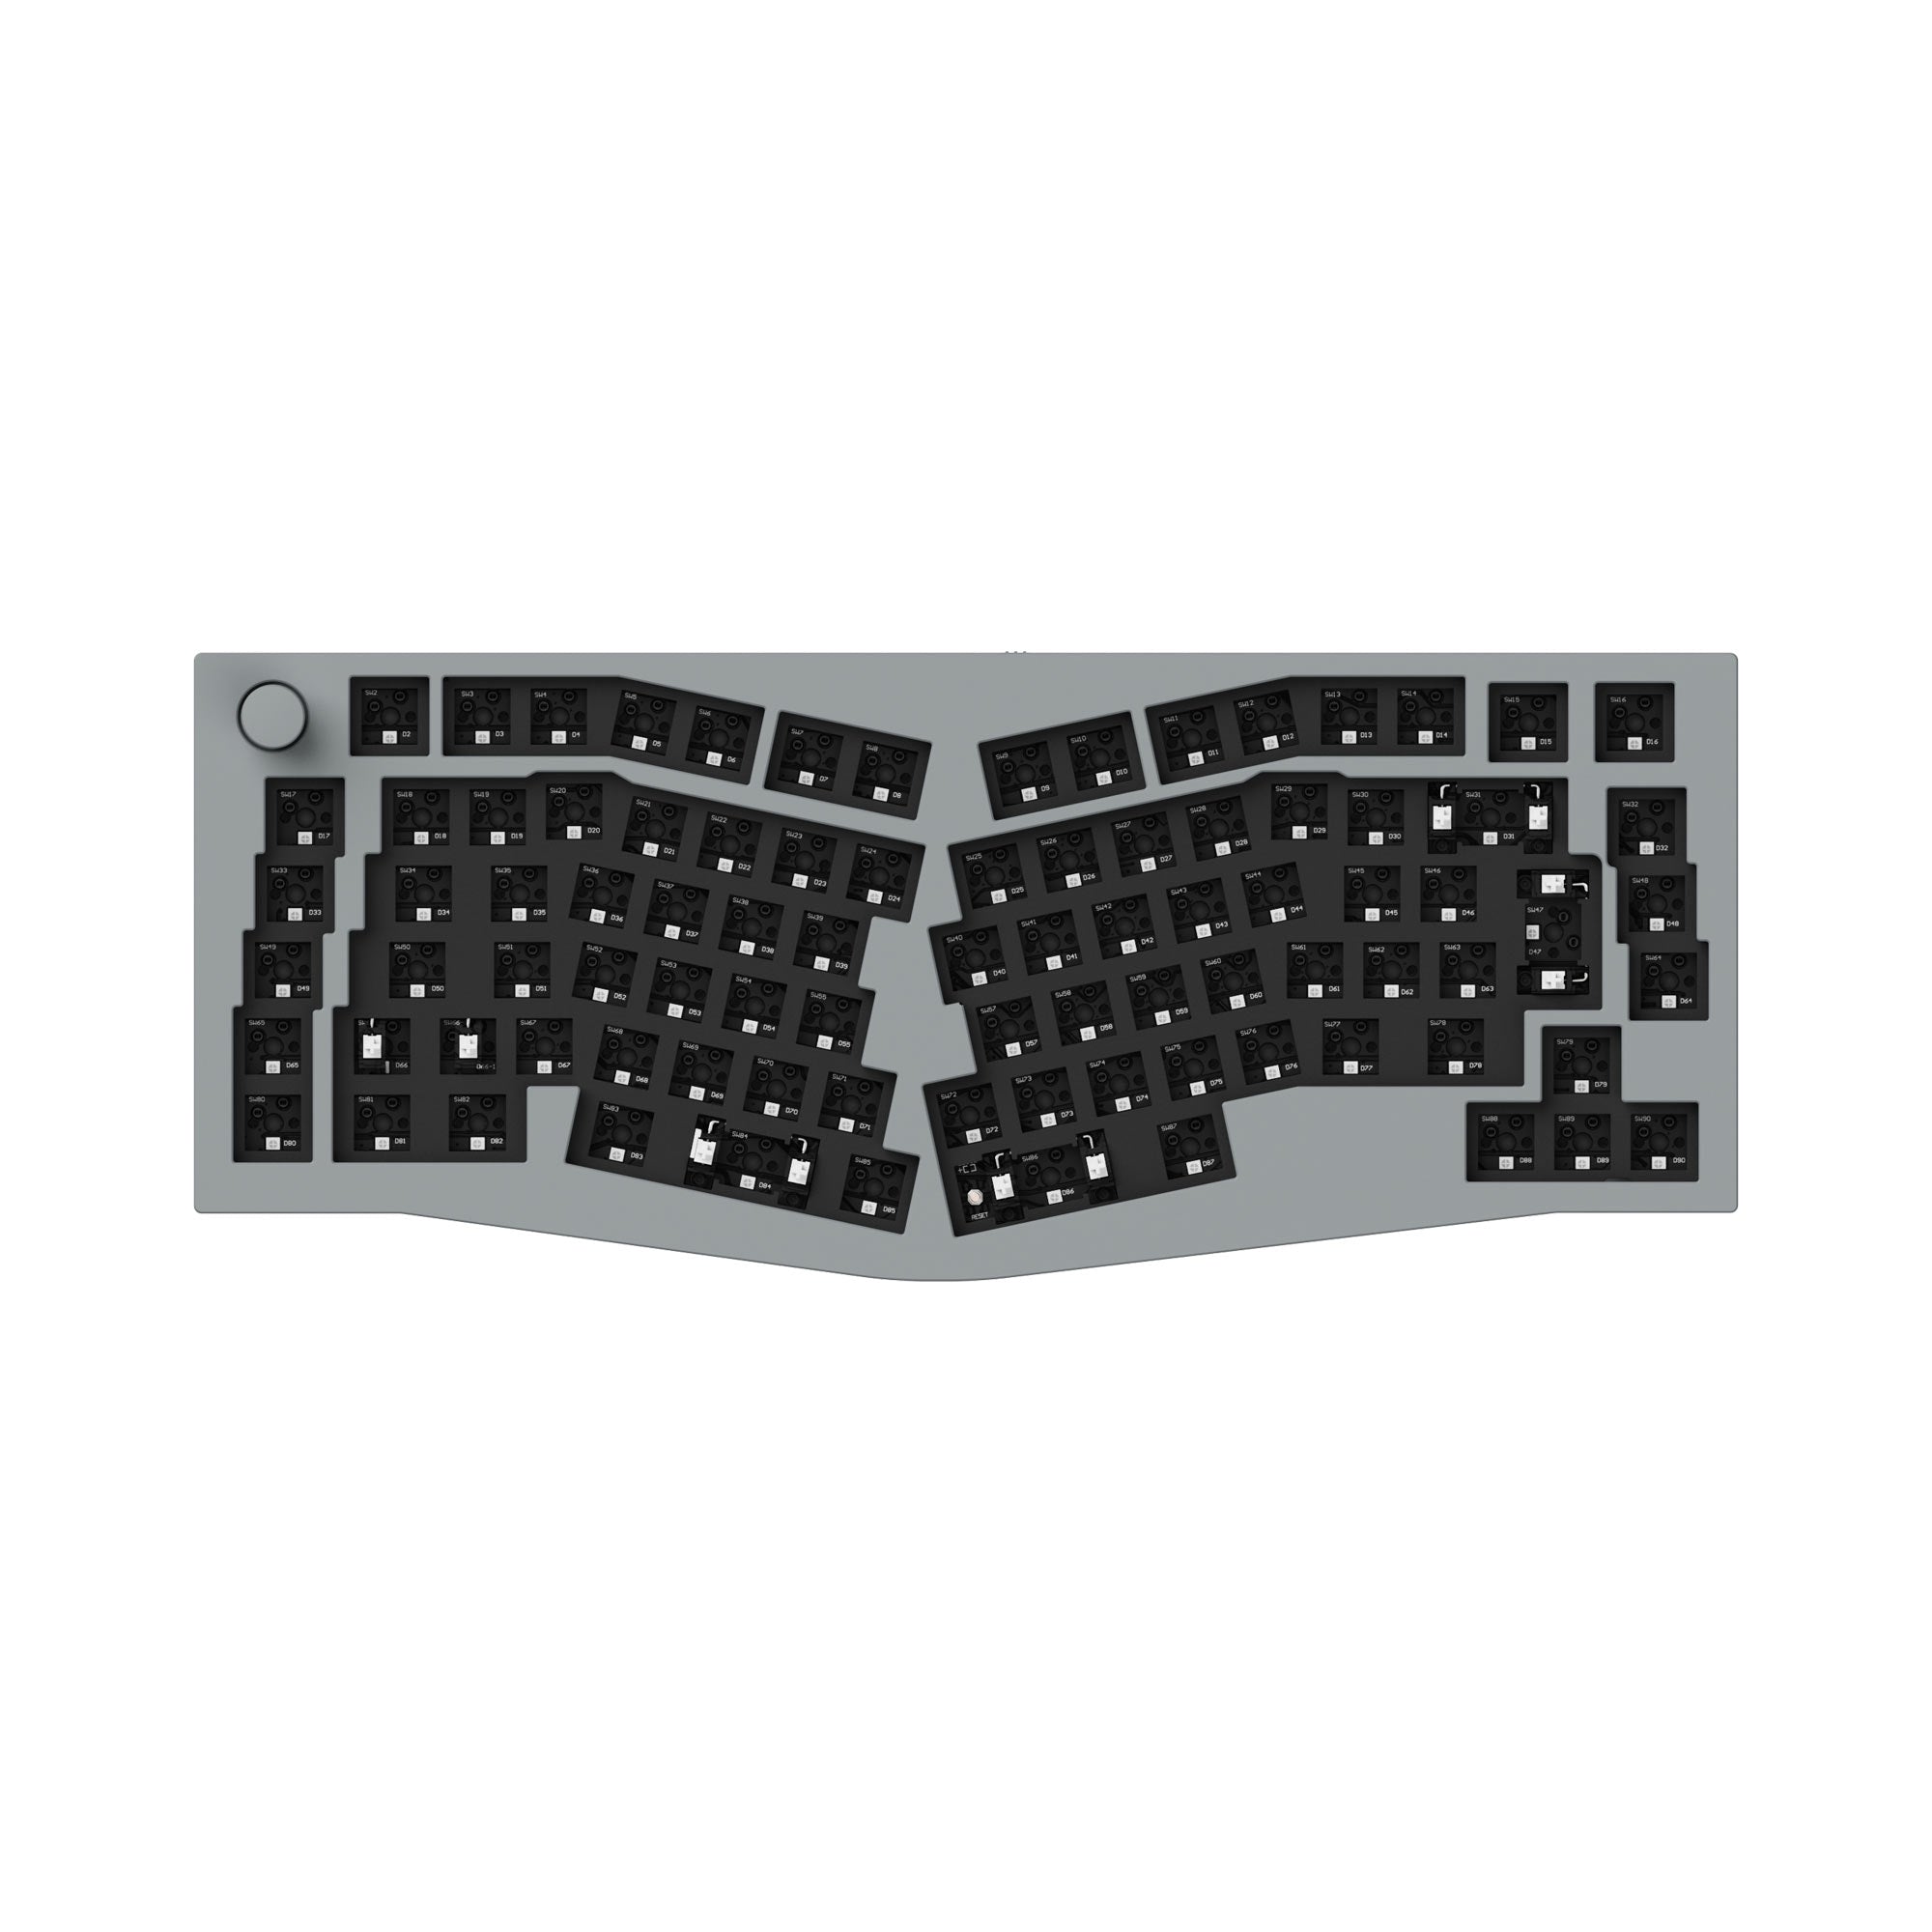 Keychron Q10 QMK/VIA custom mechanical keyboard 75% layout Alice layout ISO knob version for Mac Windows Linux full aluminum frame grey